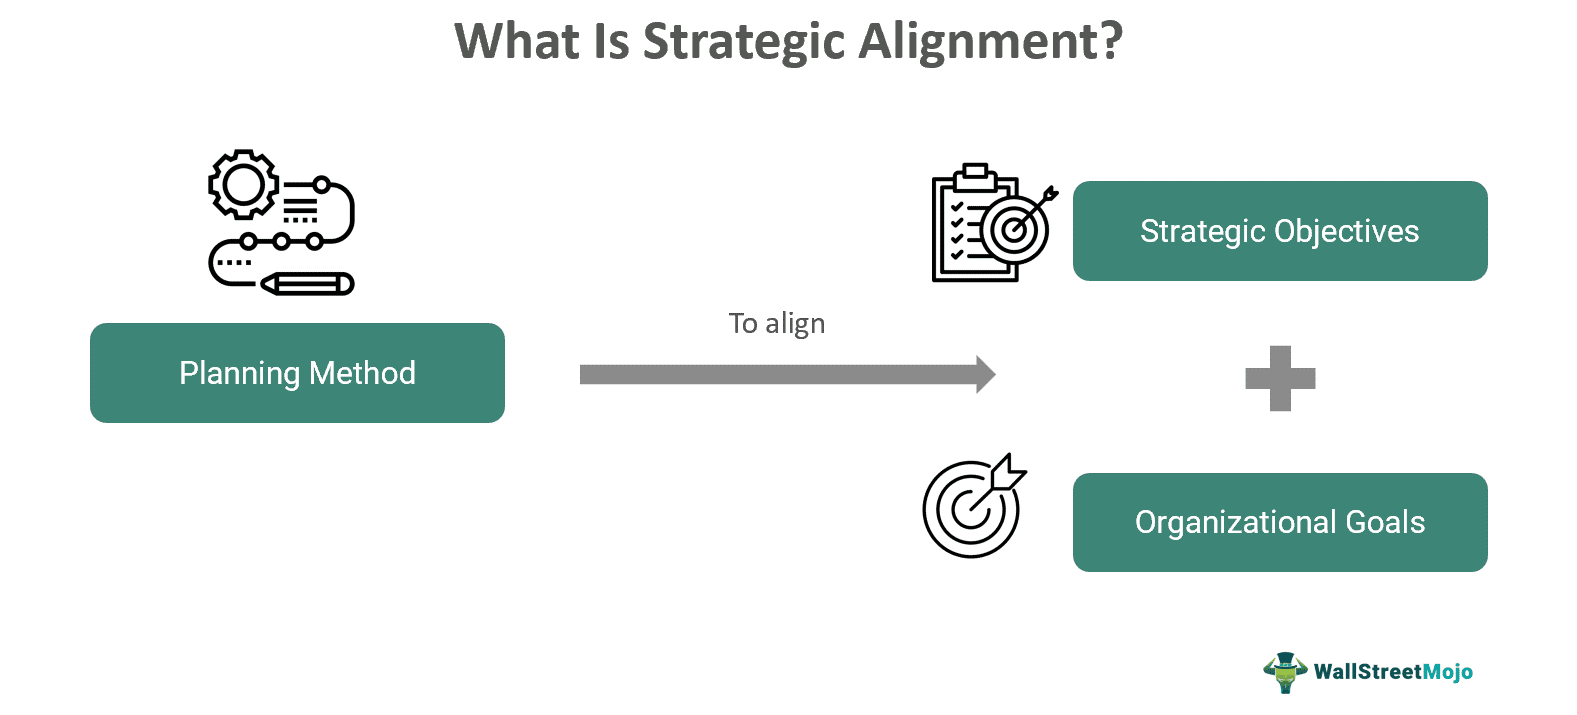 Horizontal Vs Vertical Strategic Alignment